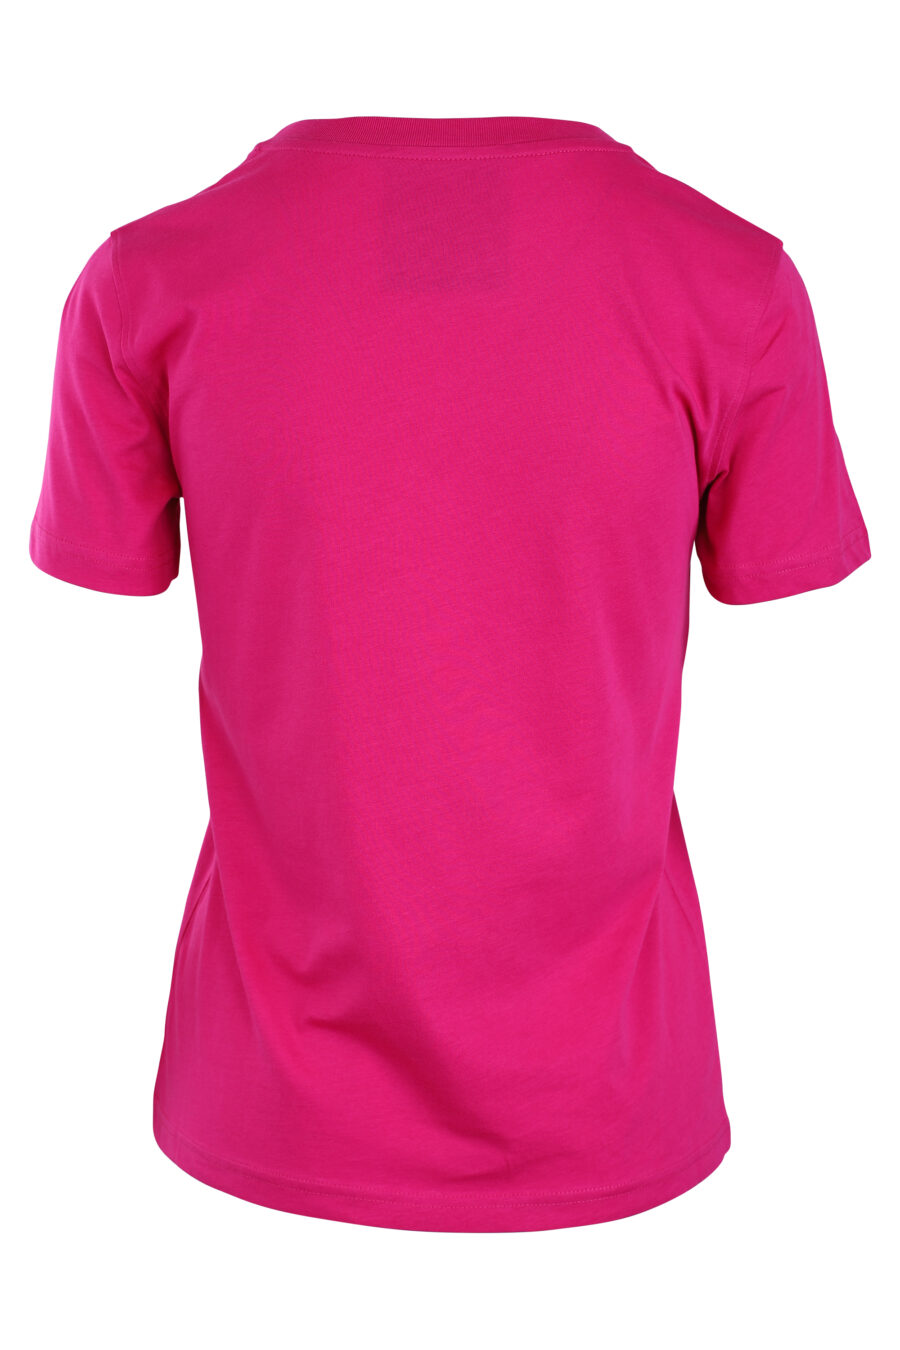 Camiseta fucsia con logo monocromático - IMG 3295